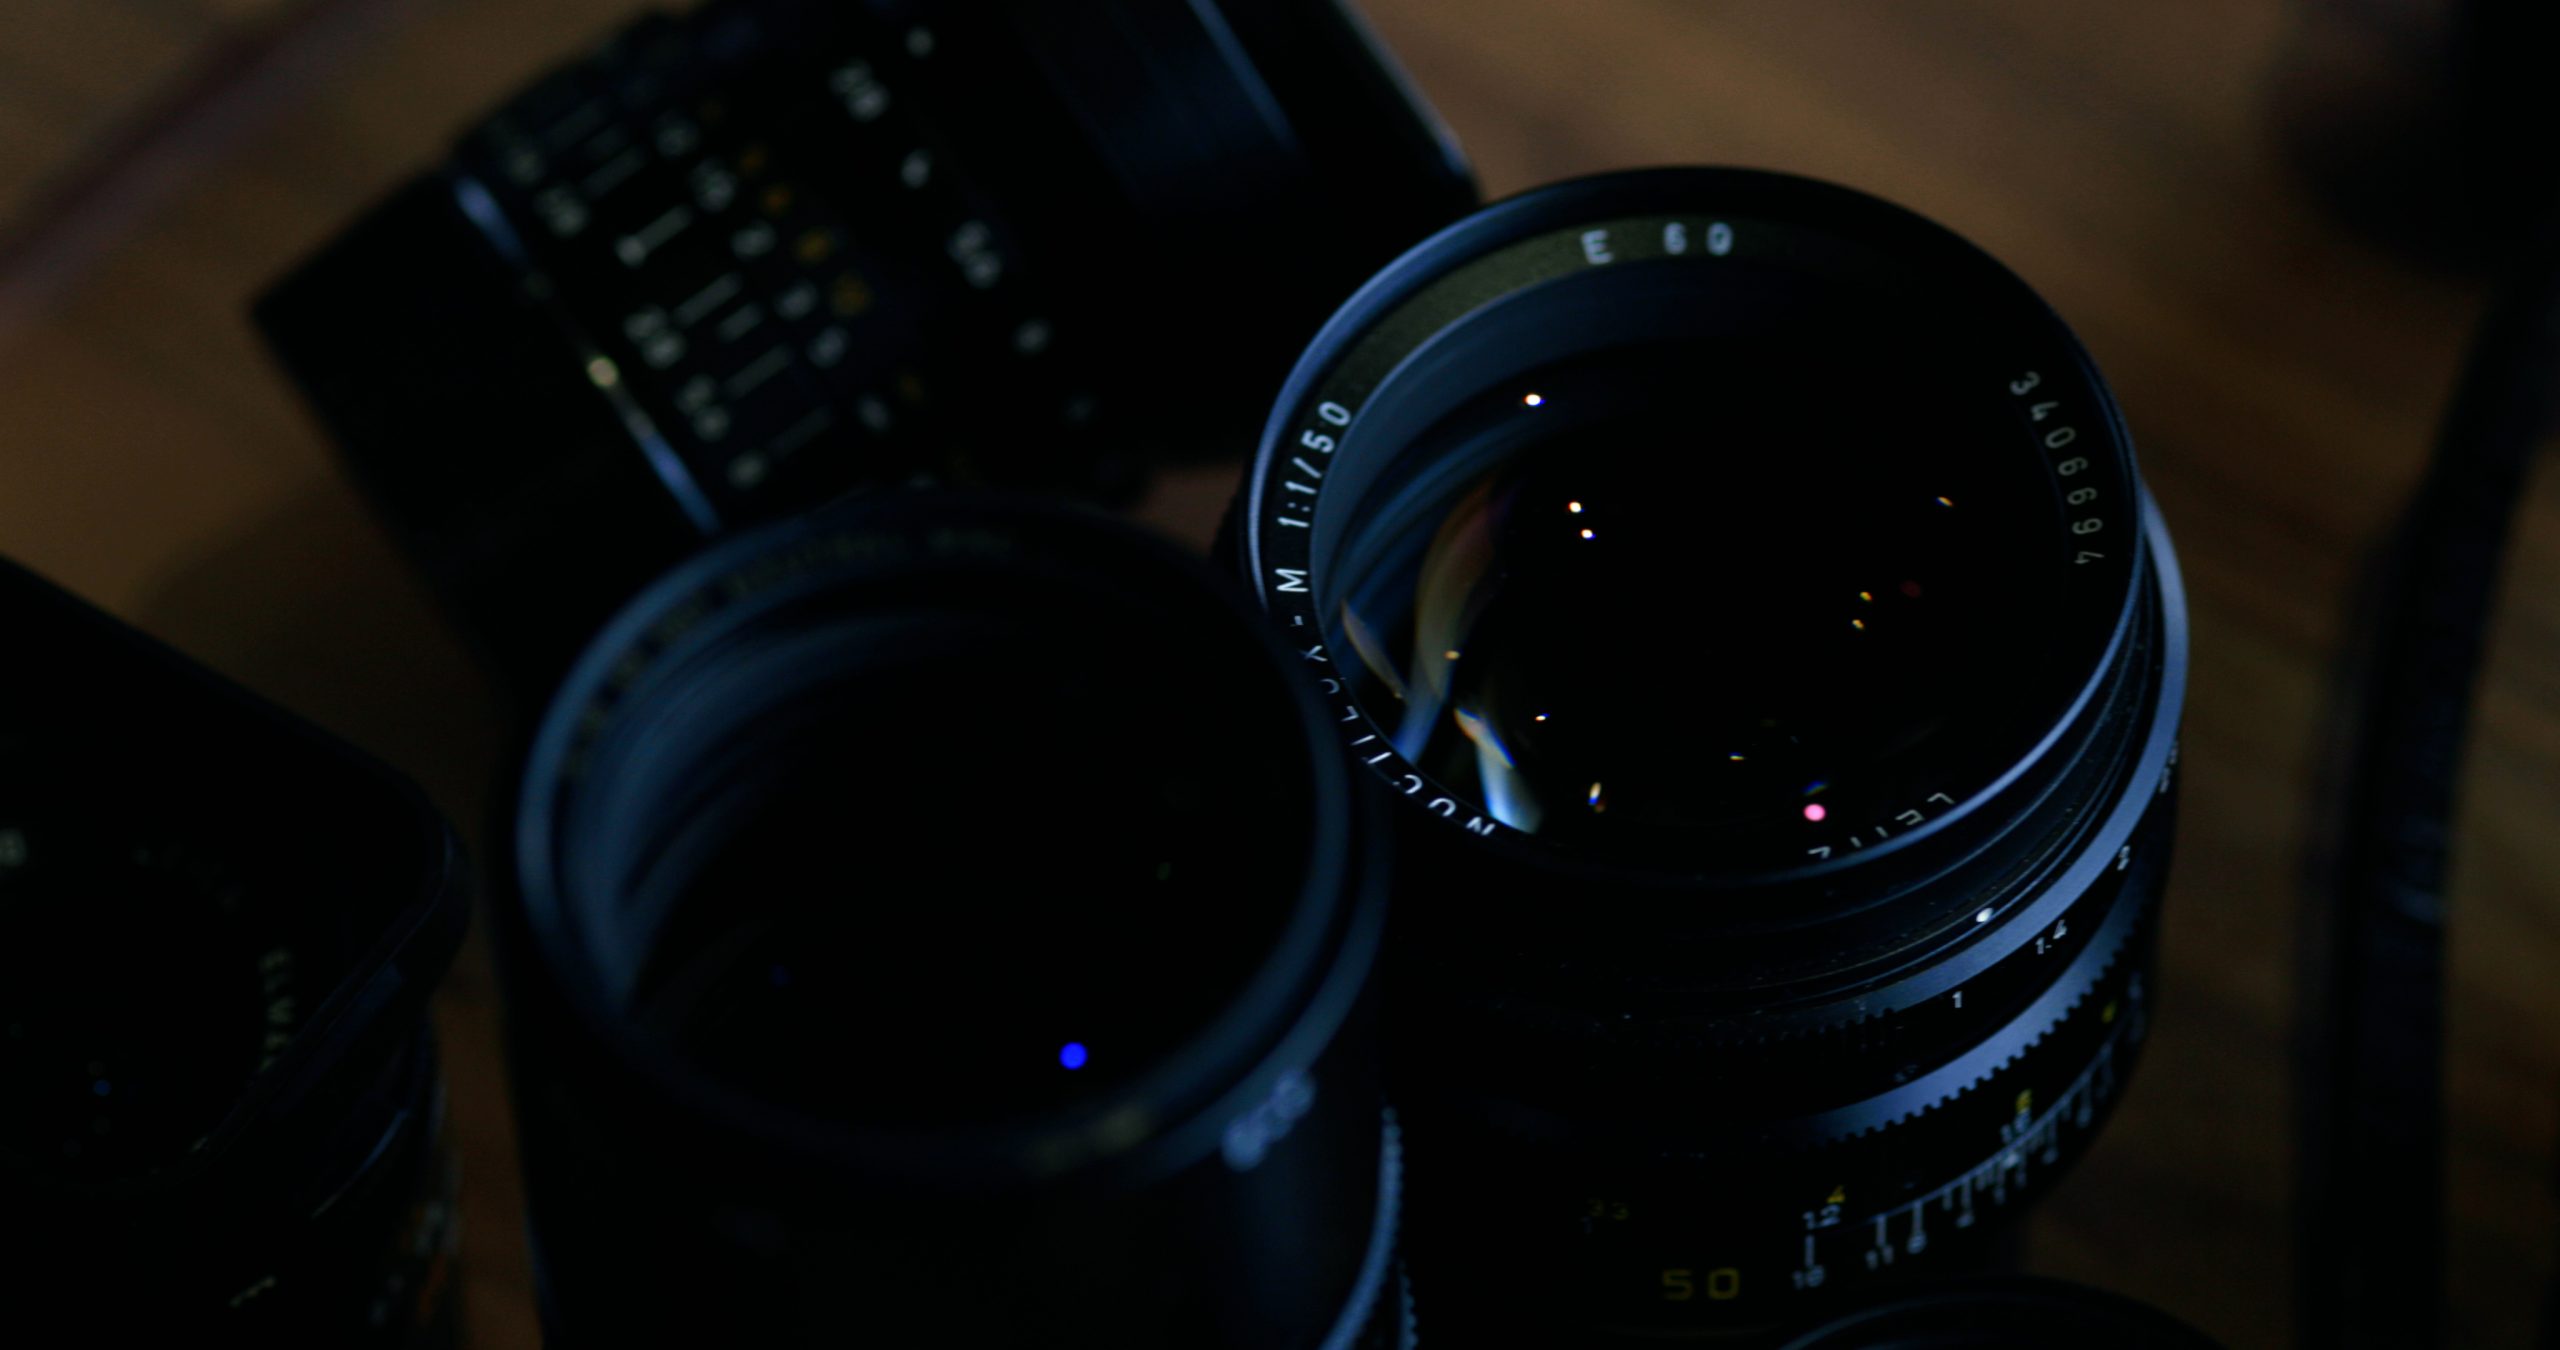 Leica Noctilux-M 50mm f1 lens Review - Low Light Photography Tutorial - Leica Review - Oz YilmazLeica Noctilux-M 50mm f1 lens Review - Low Light Photography Tutorial - Leica Review - Oz Yilmaz